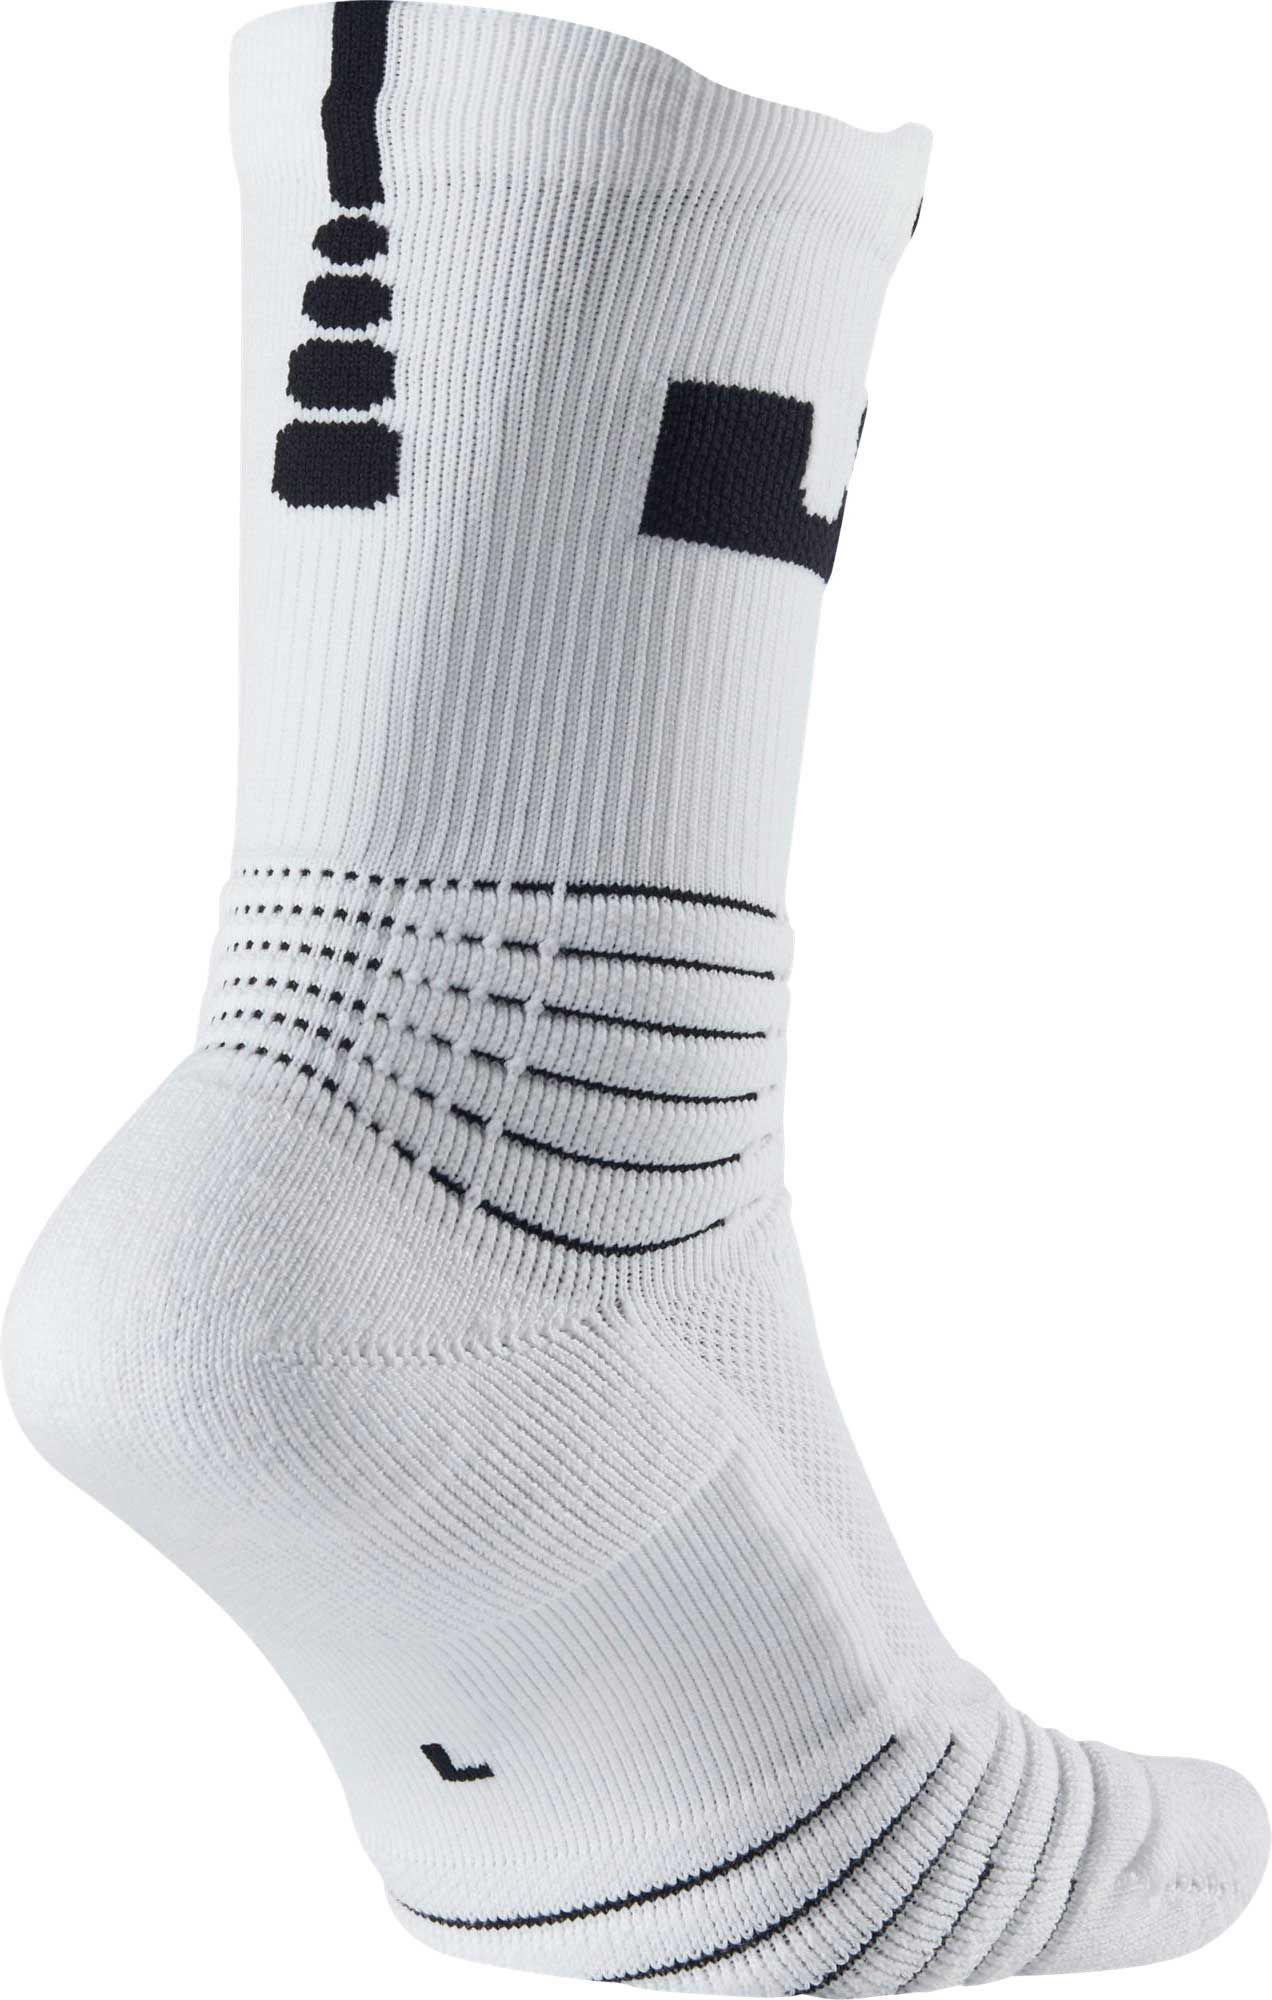 Nike Lebron Elite Versatility Crew Socks in White/Black (White) for Men ...